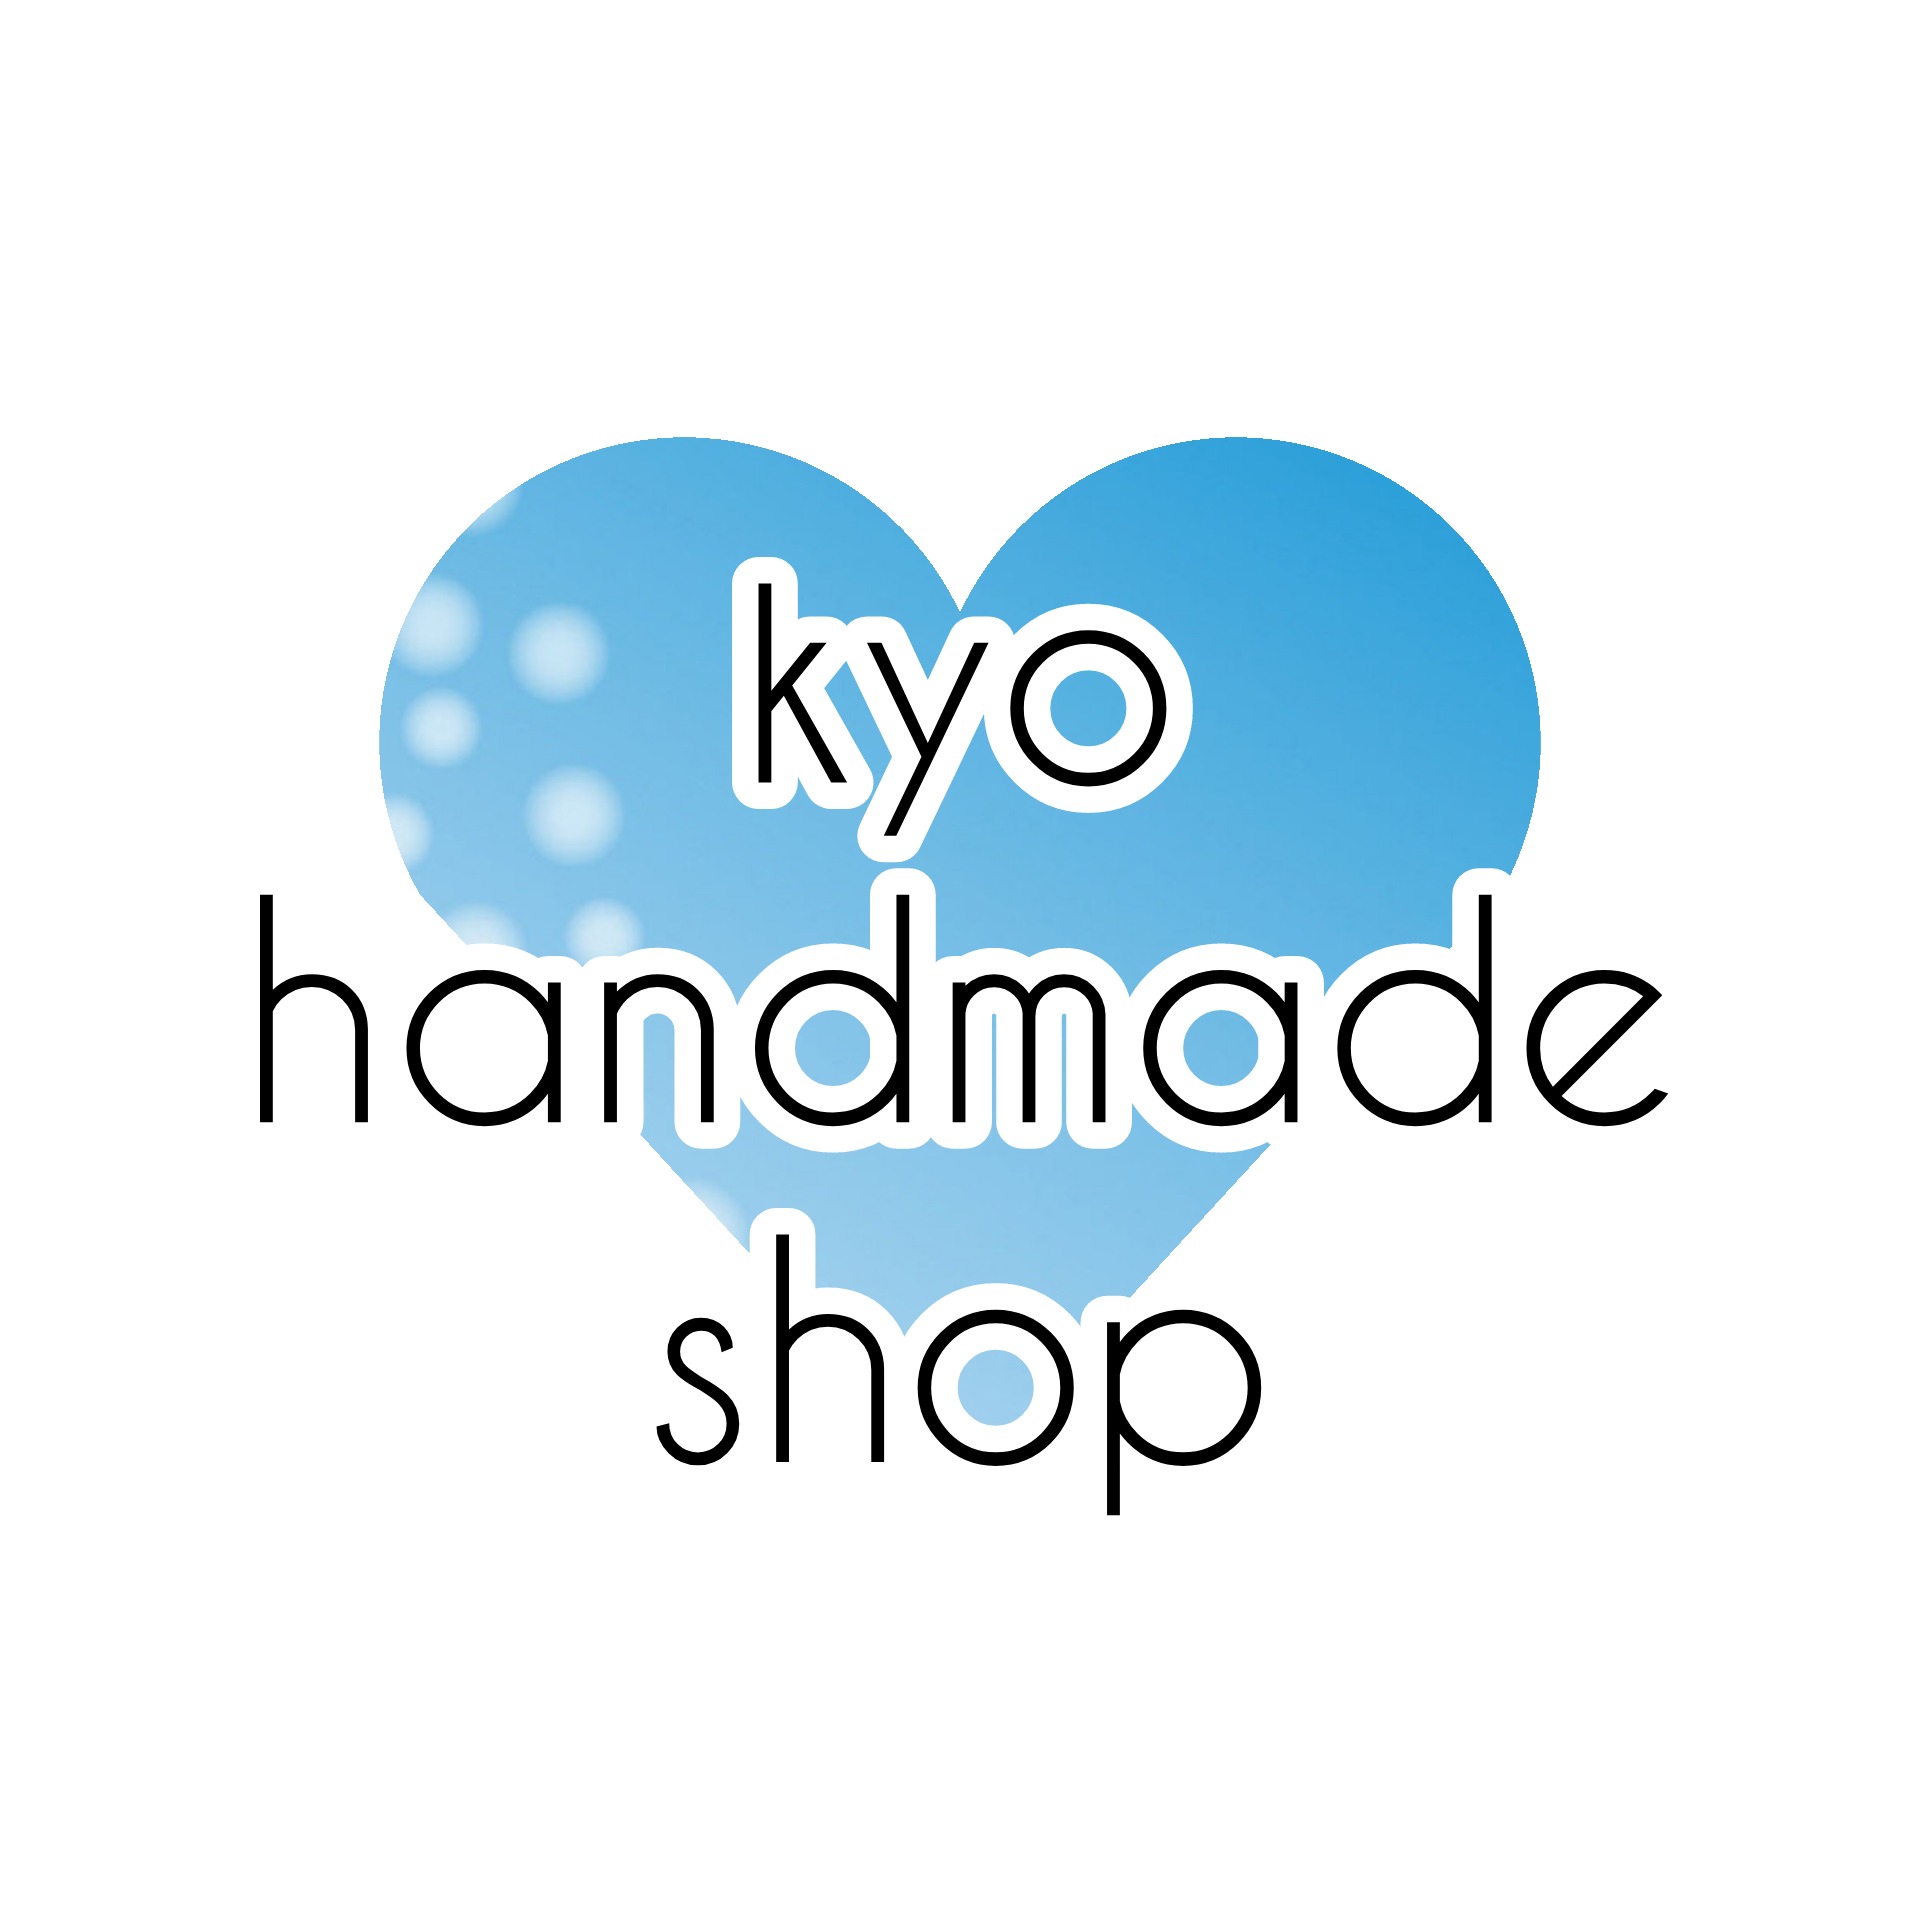 kyo handmade shop